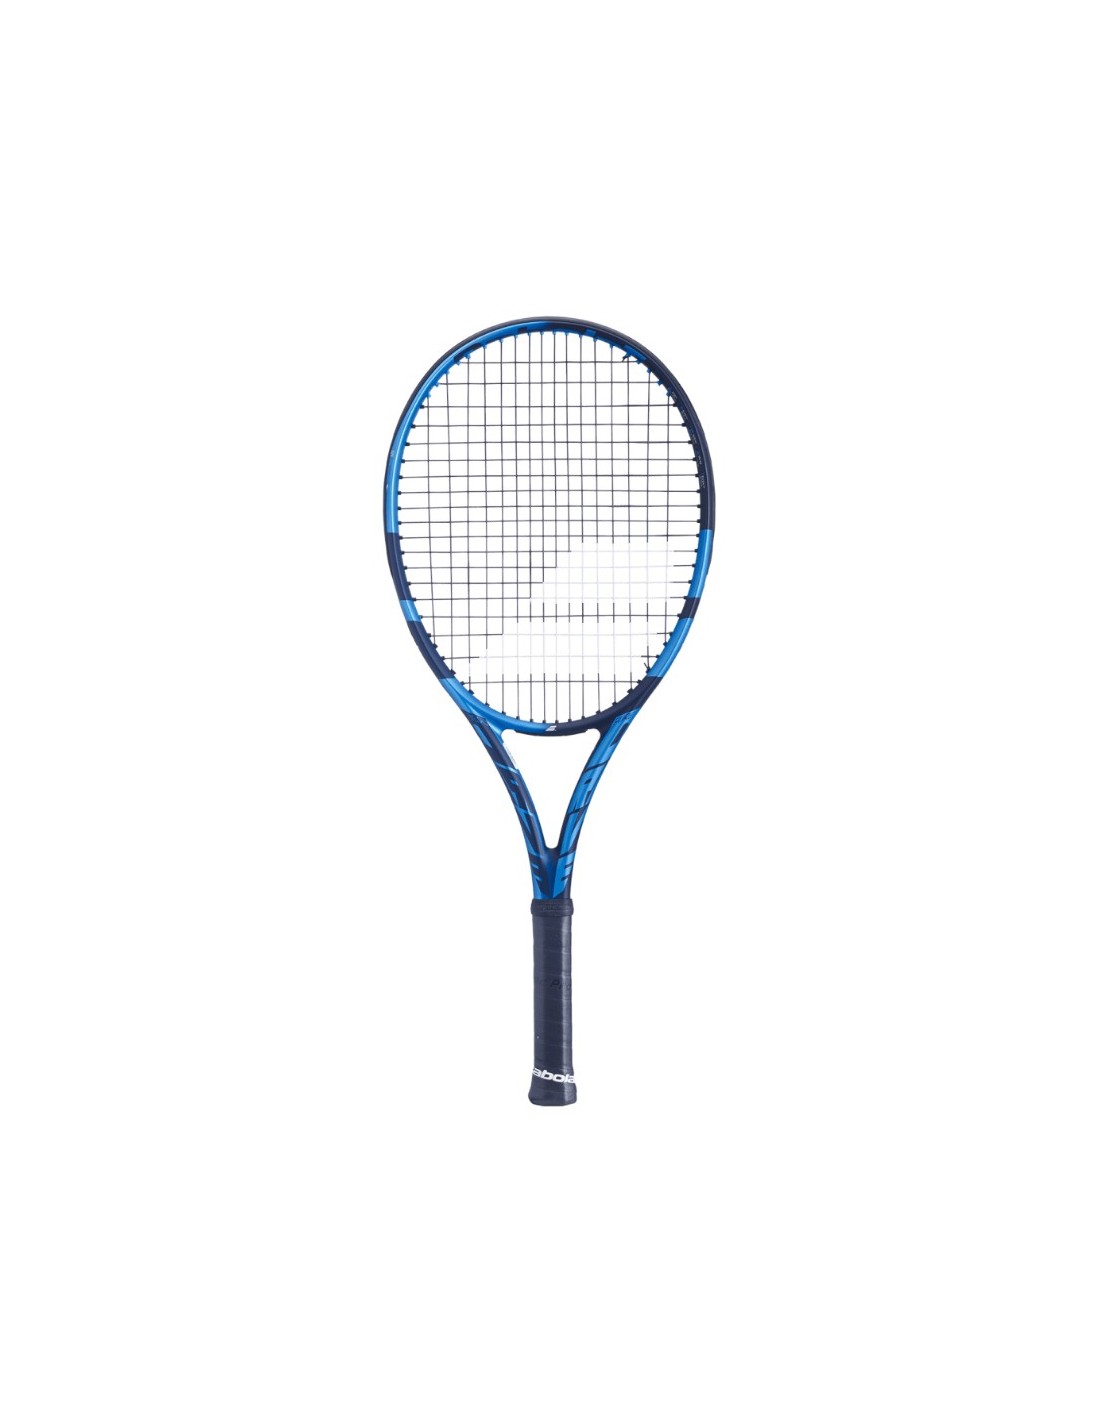 Babolat Pure Drive junior 26 besaitet 250g raqueta de tenis blanco-azul Nuevo